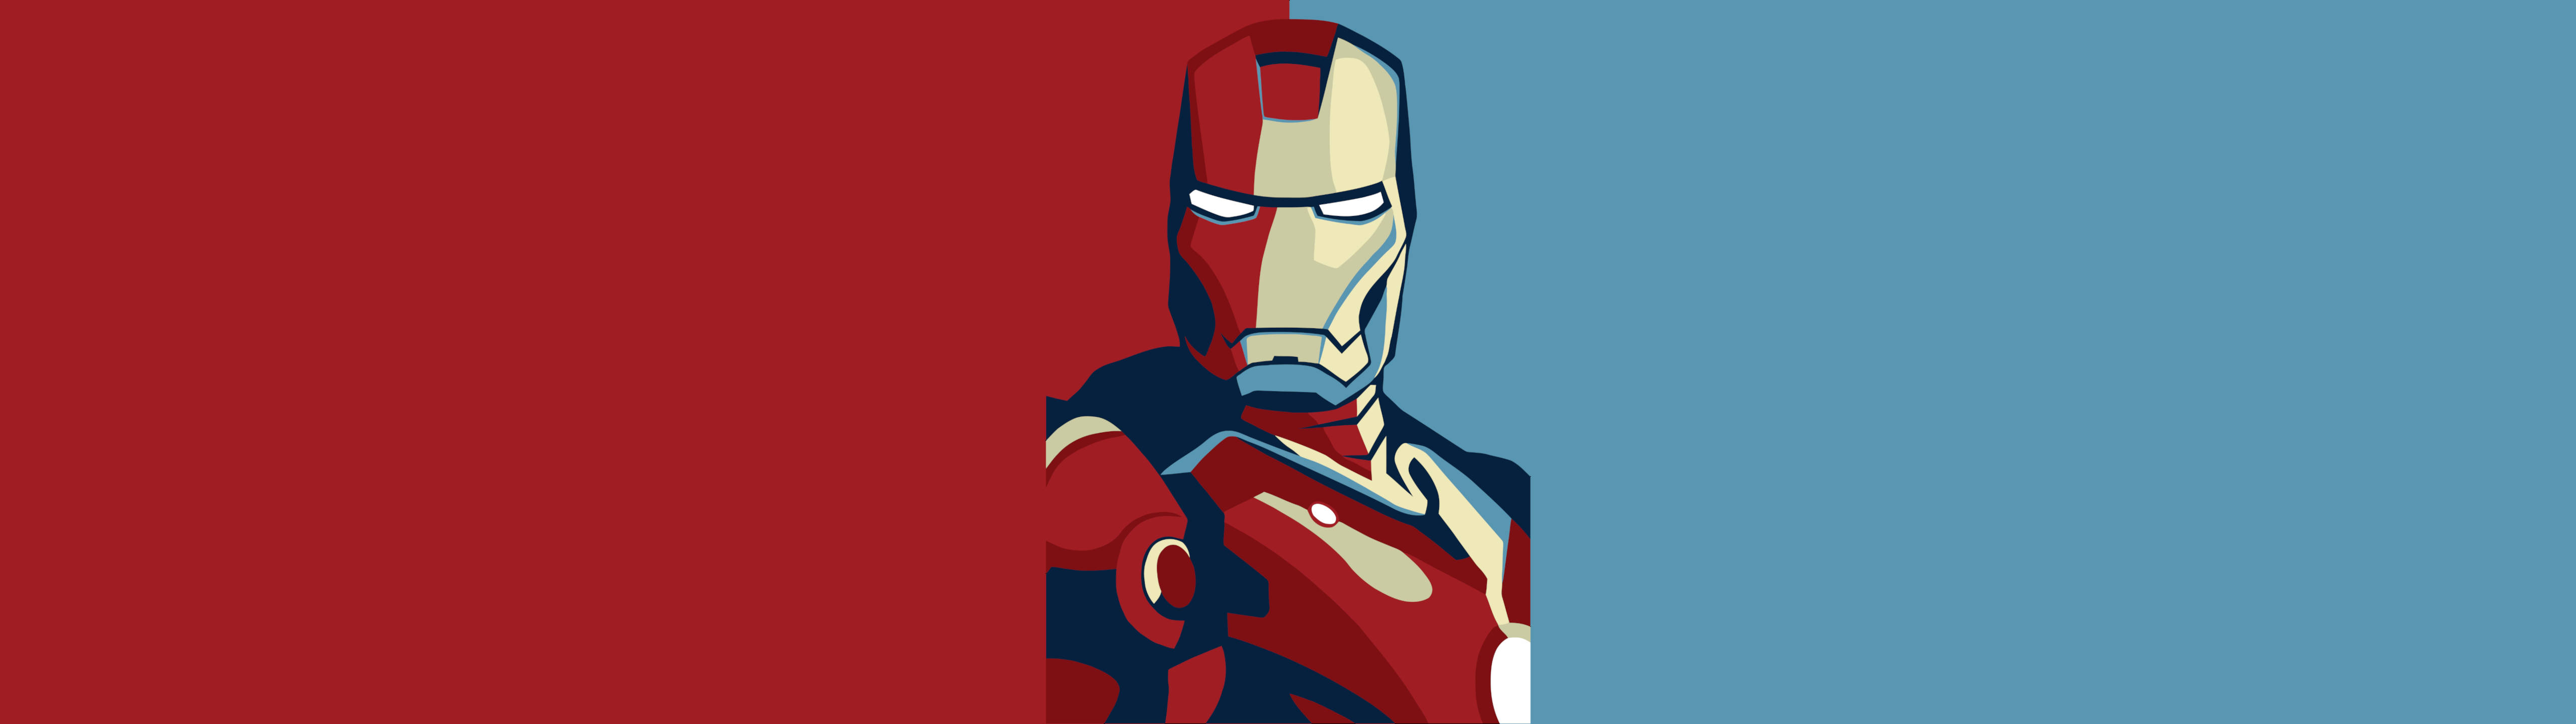 Marvel Hero Ironman 5120 X 1440 Background